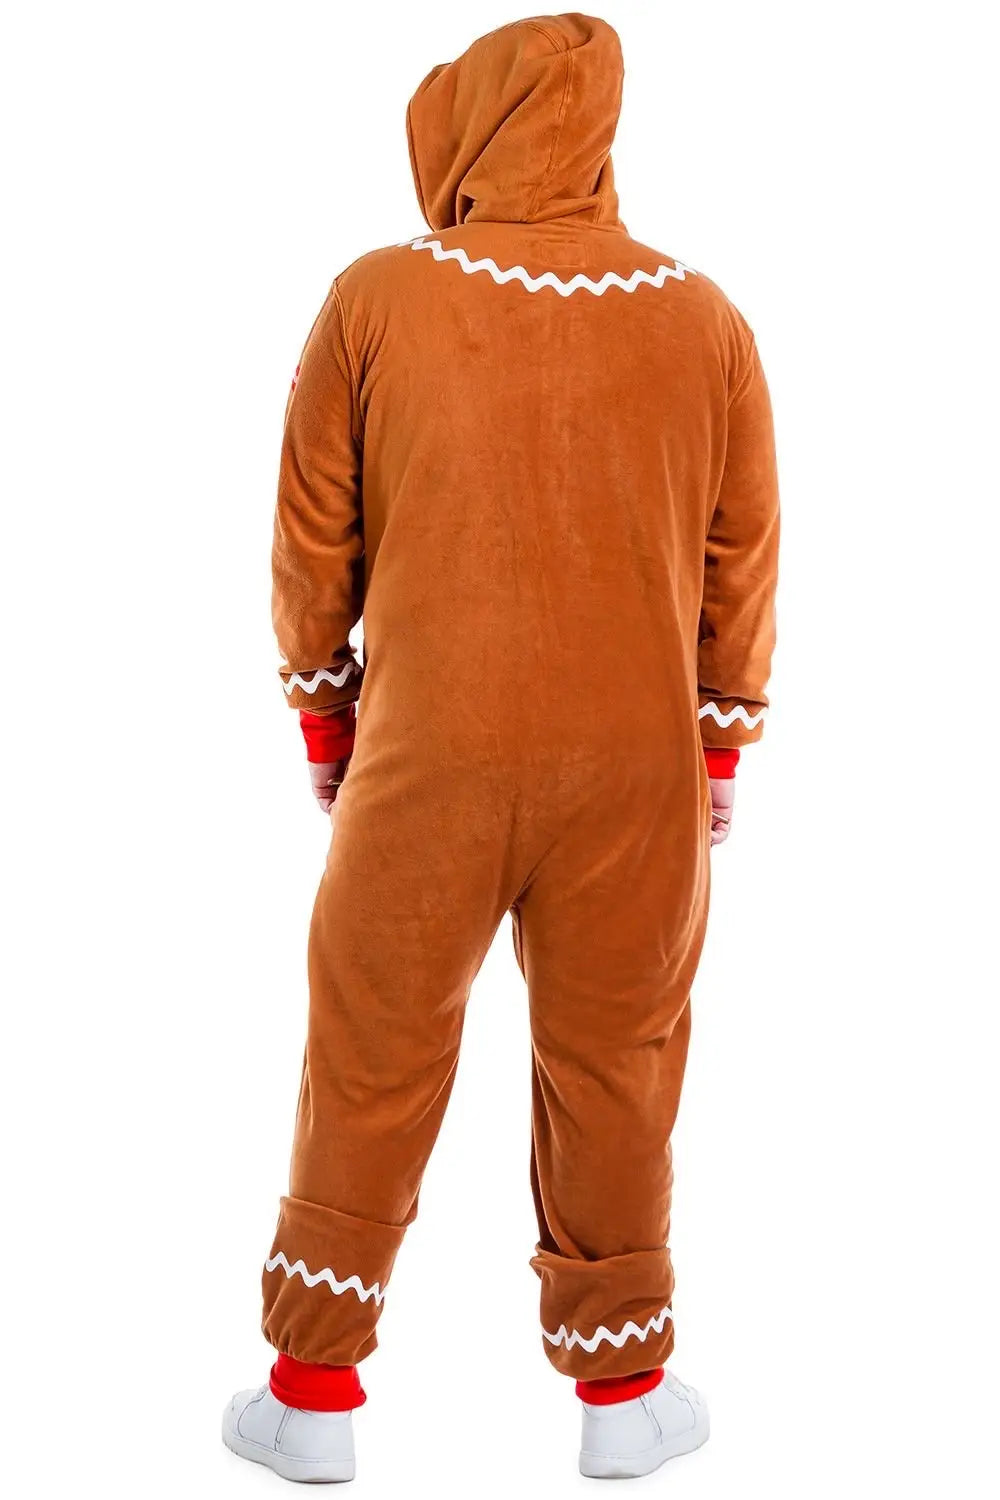 Unisex Gingerbread Christmas Jumpsuit